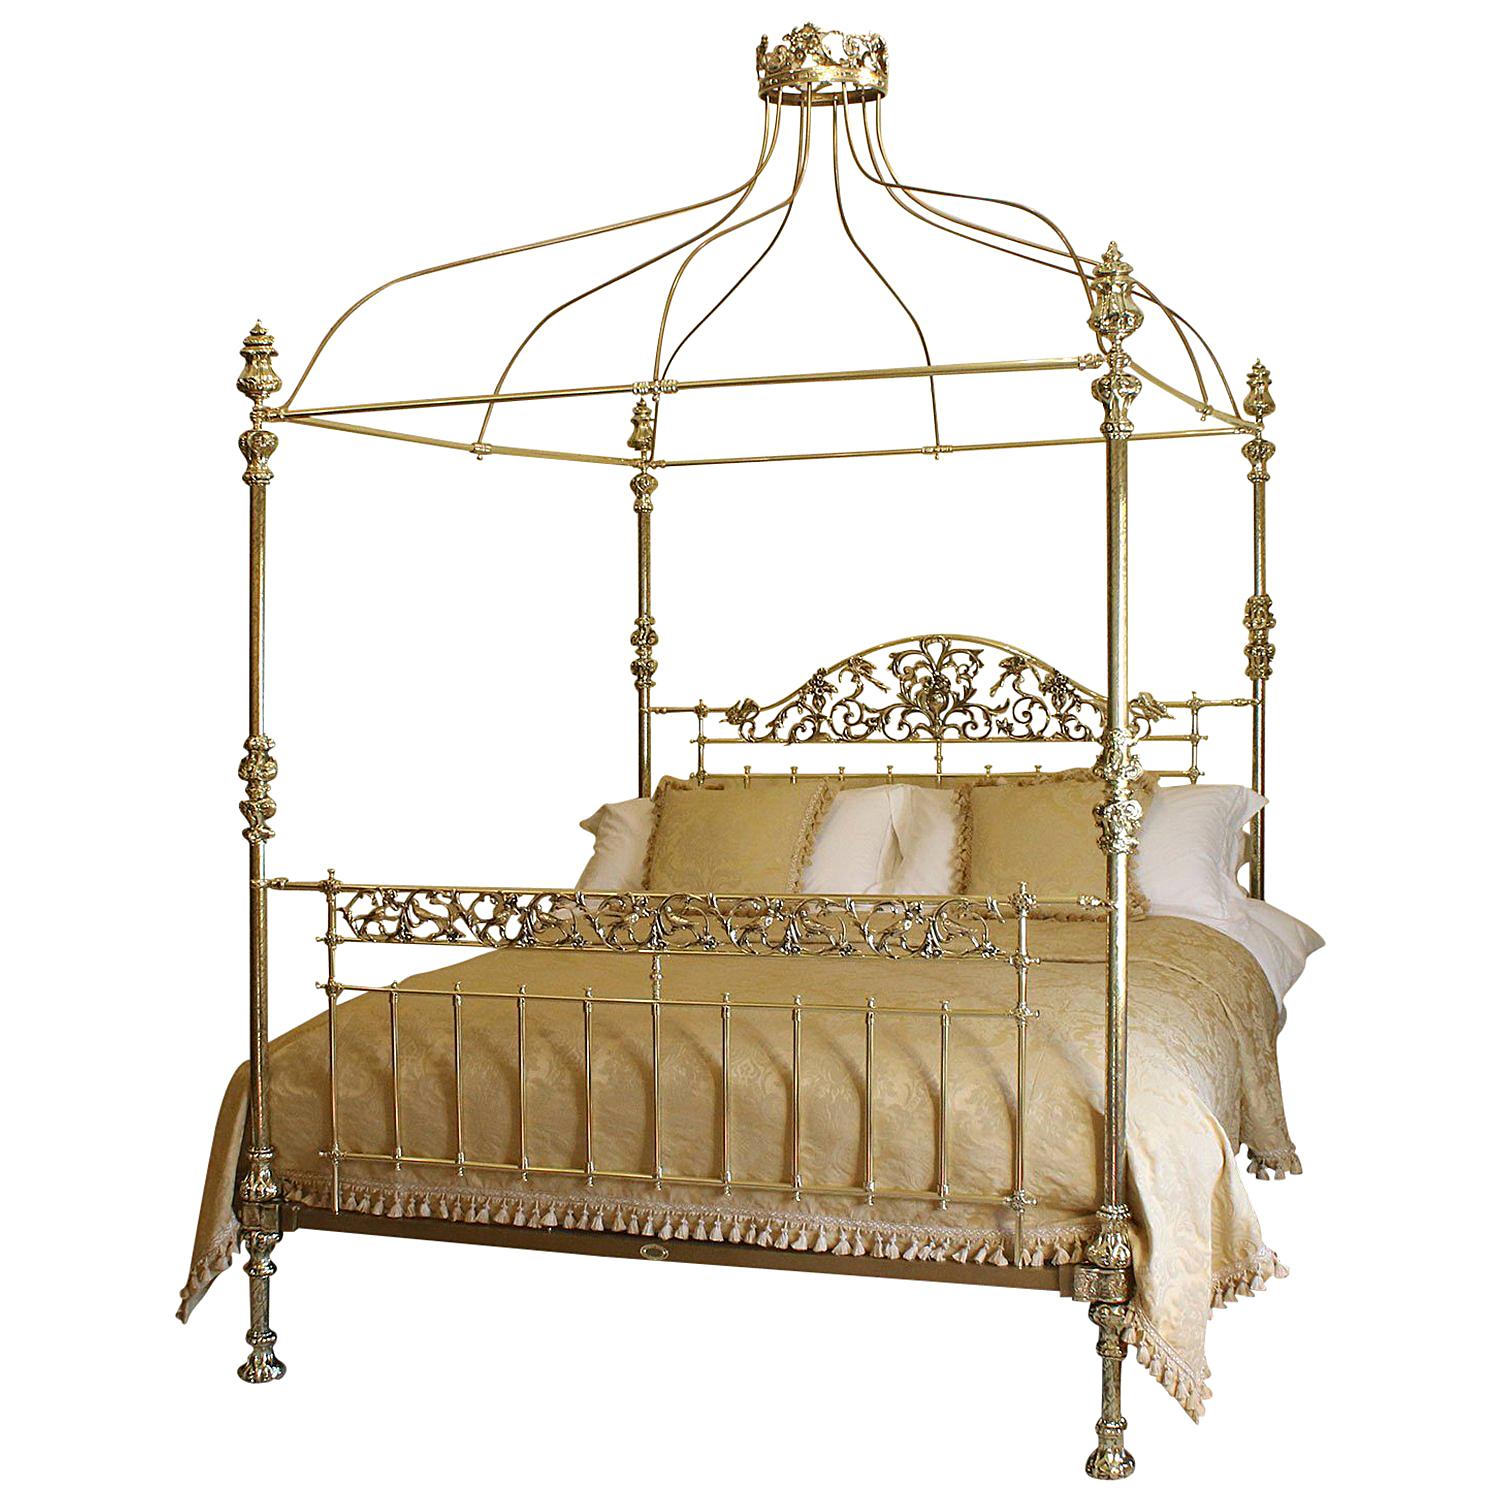 Antique Brass Four Poster Bed At 1stdibs, Bird Bed Frame